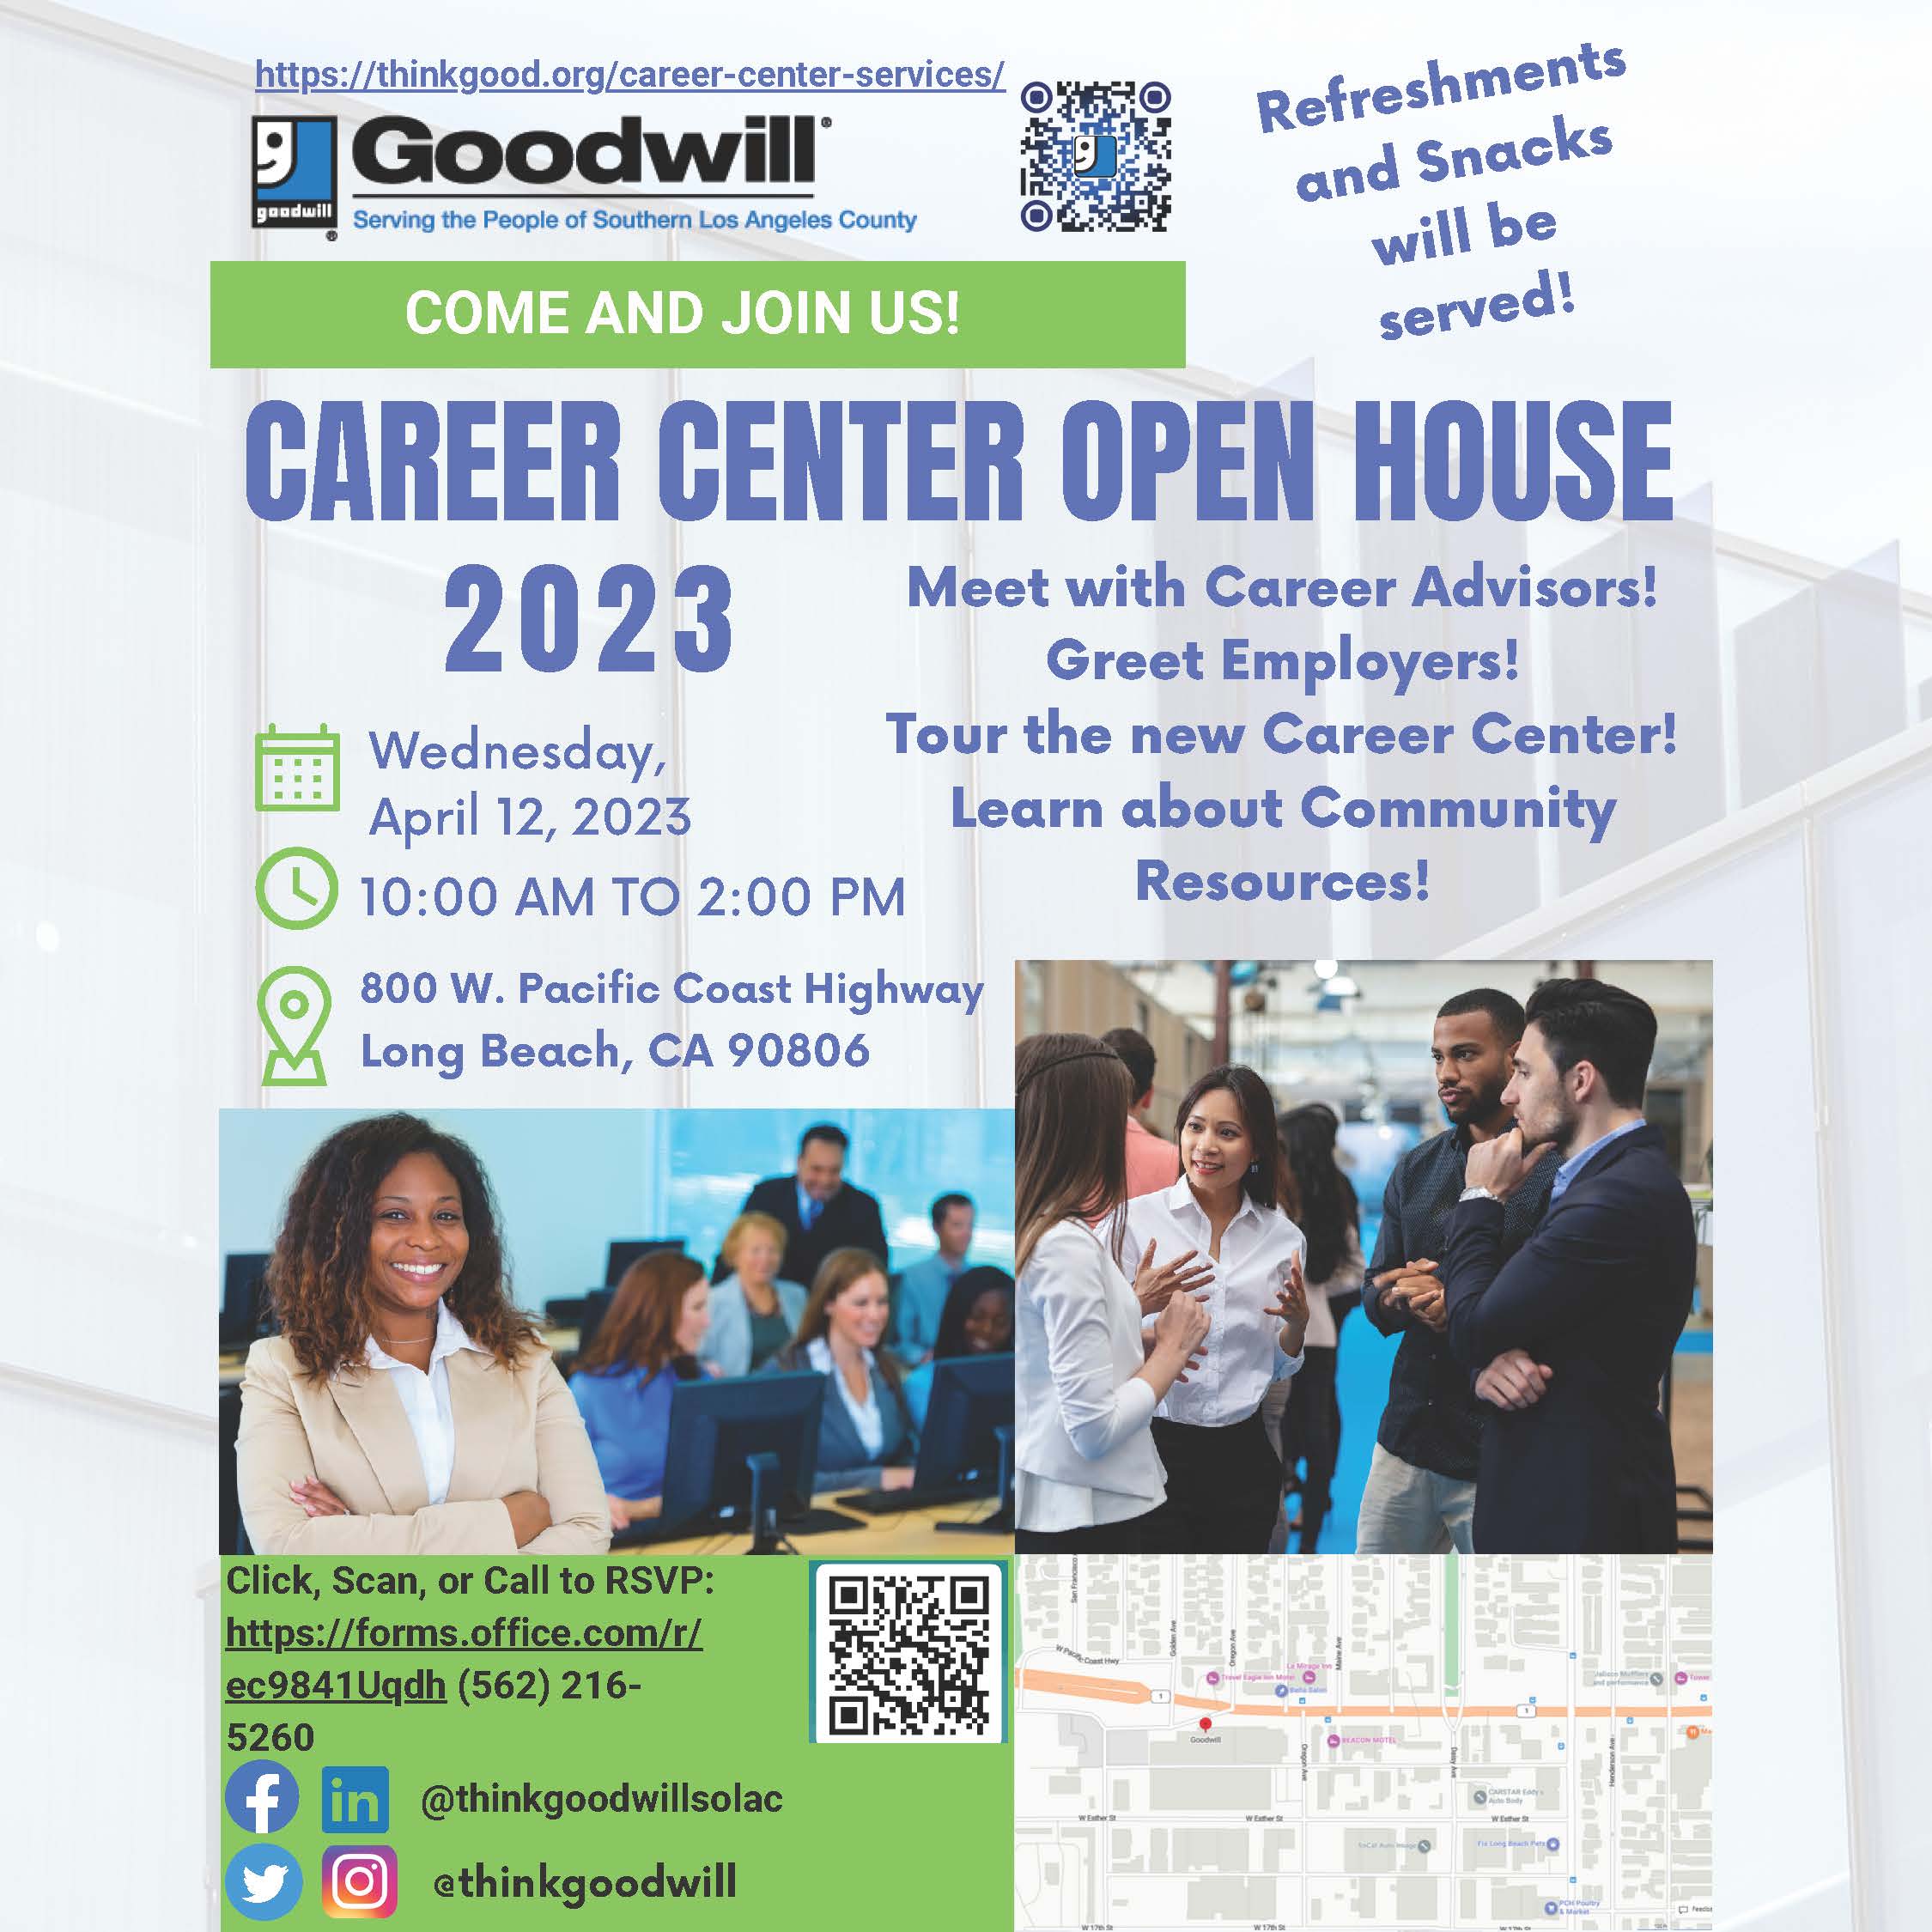 Goodwill Career Center Open House